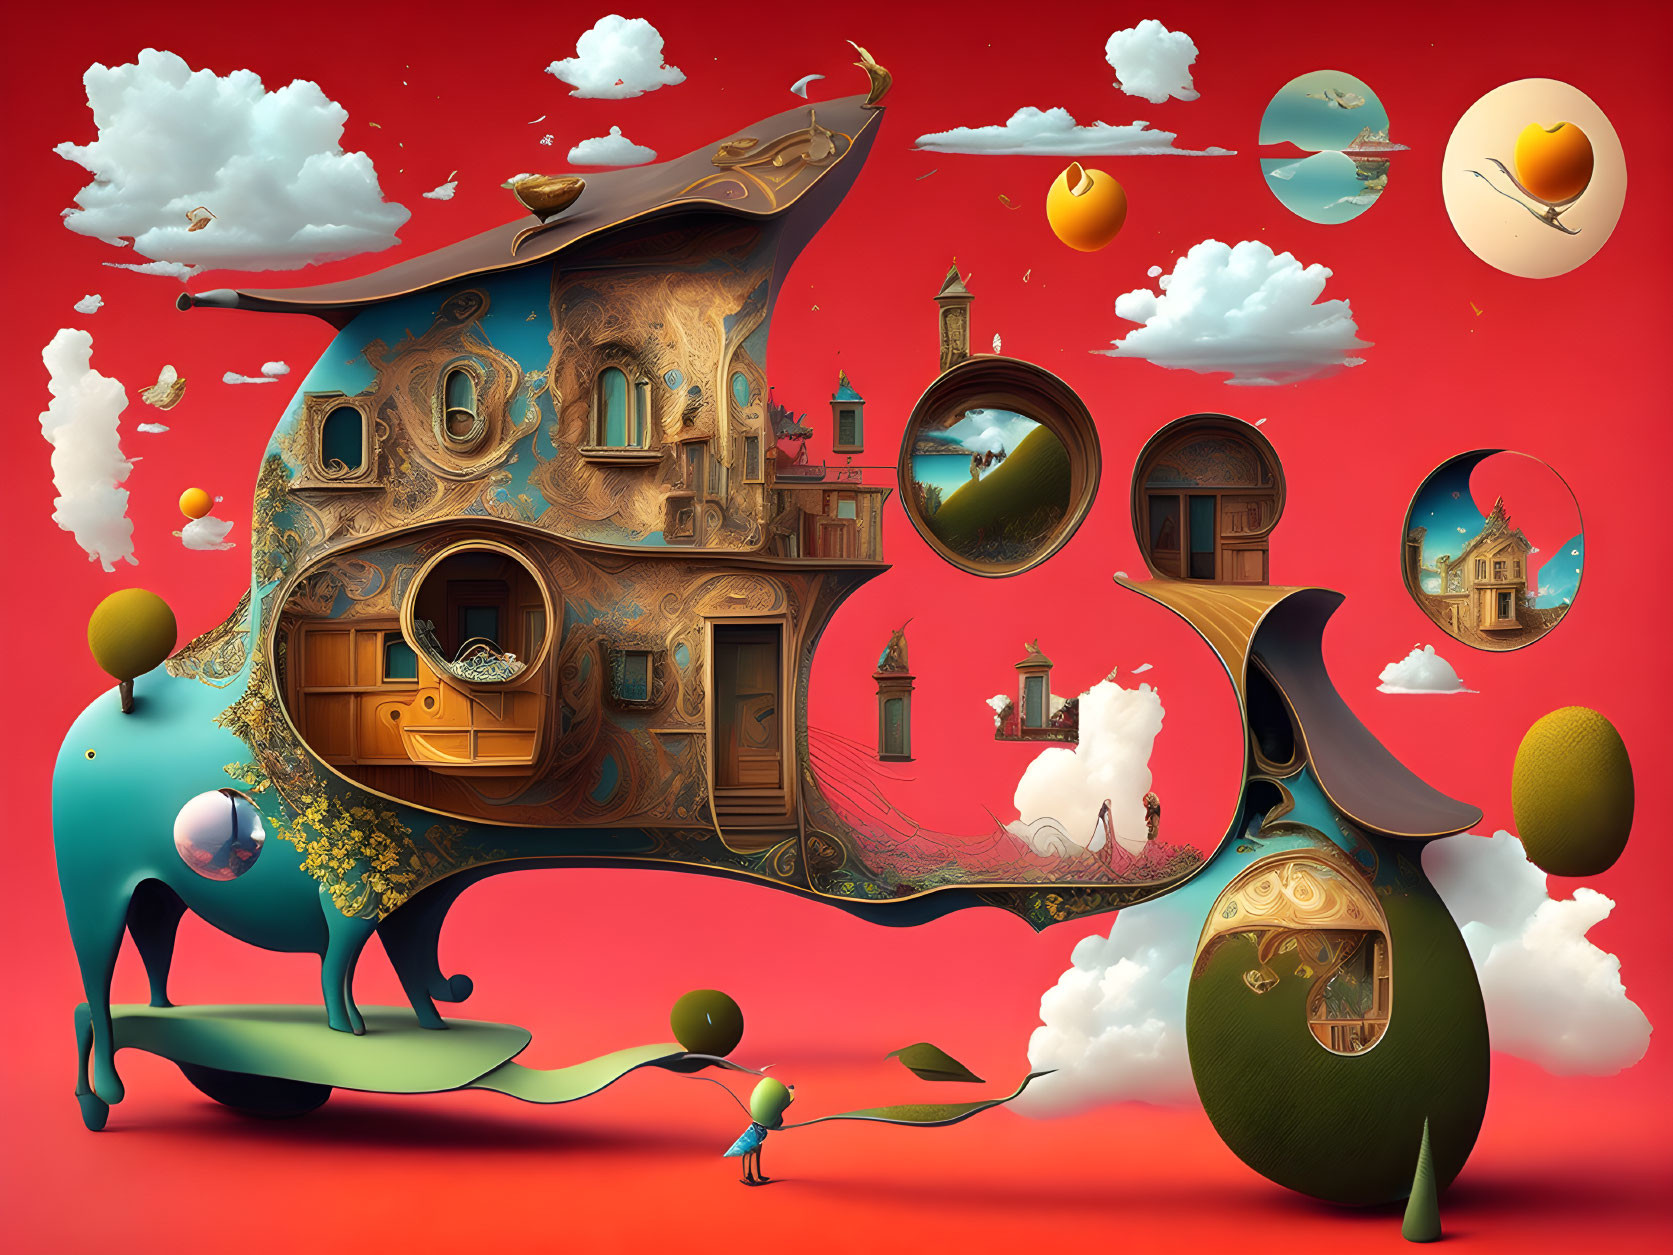 Digital artwork: Floating orbs, house-like character, animal figure on red background.